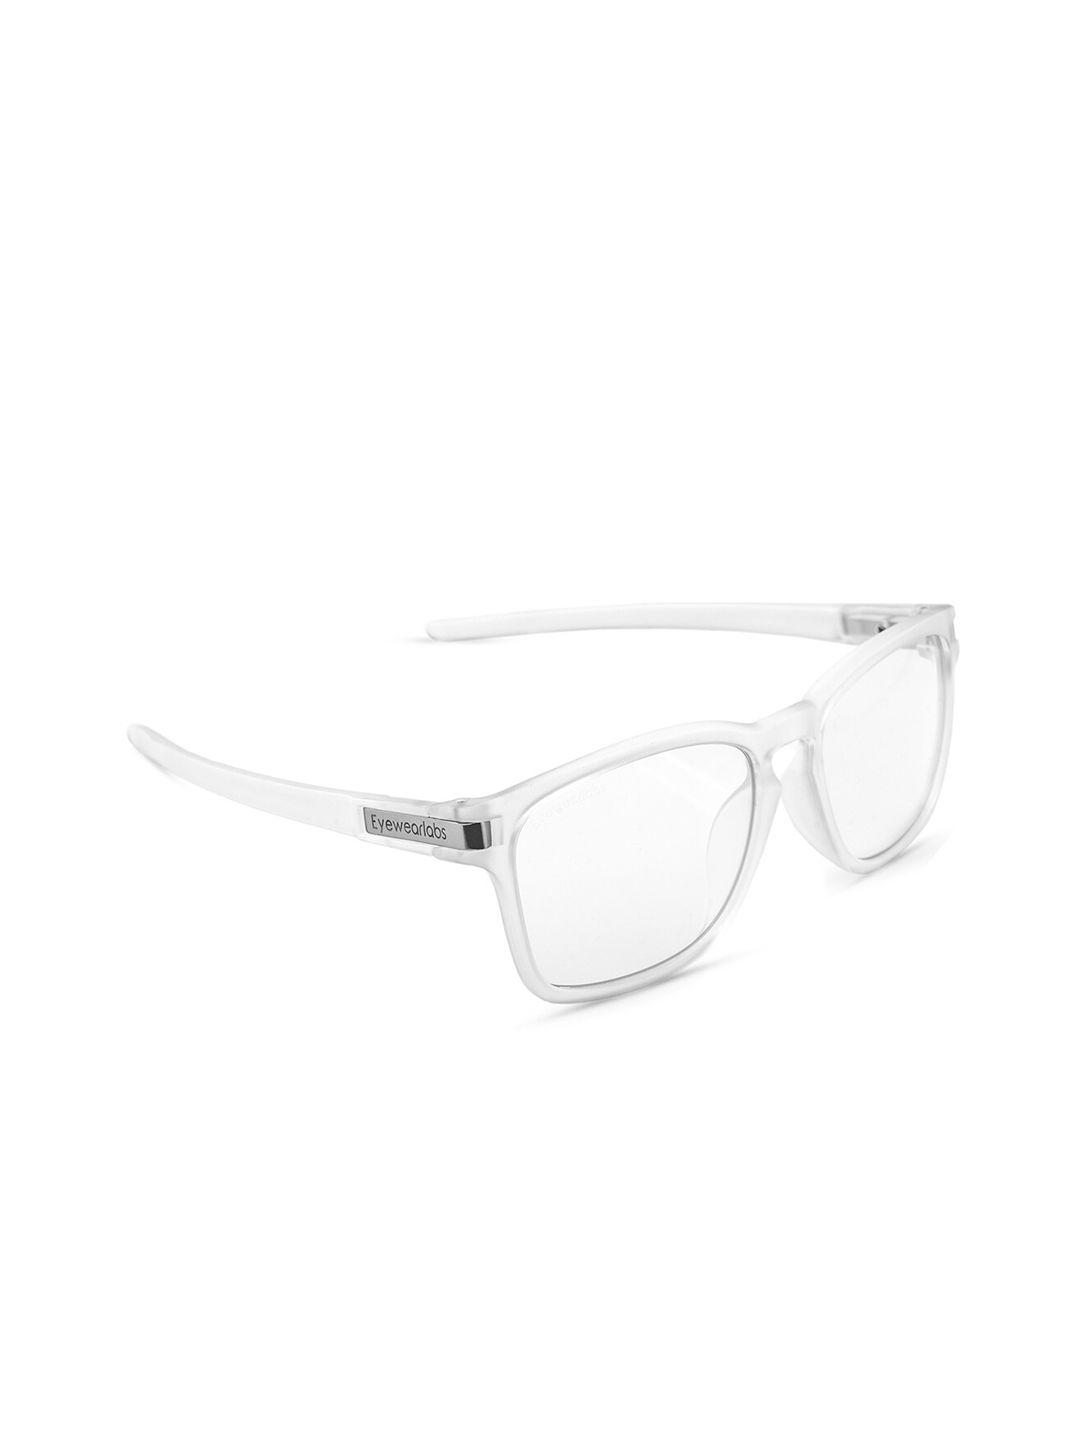 eyewearlabs unisex white full rim wayfarer frames